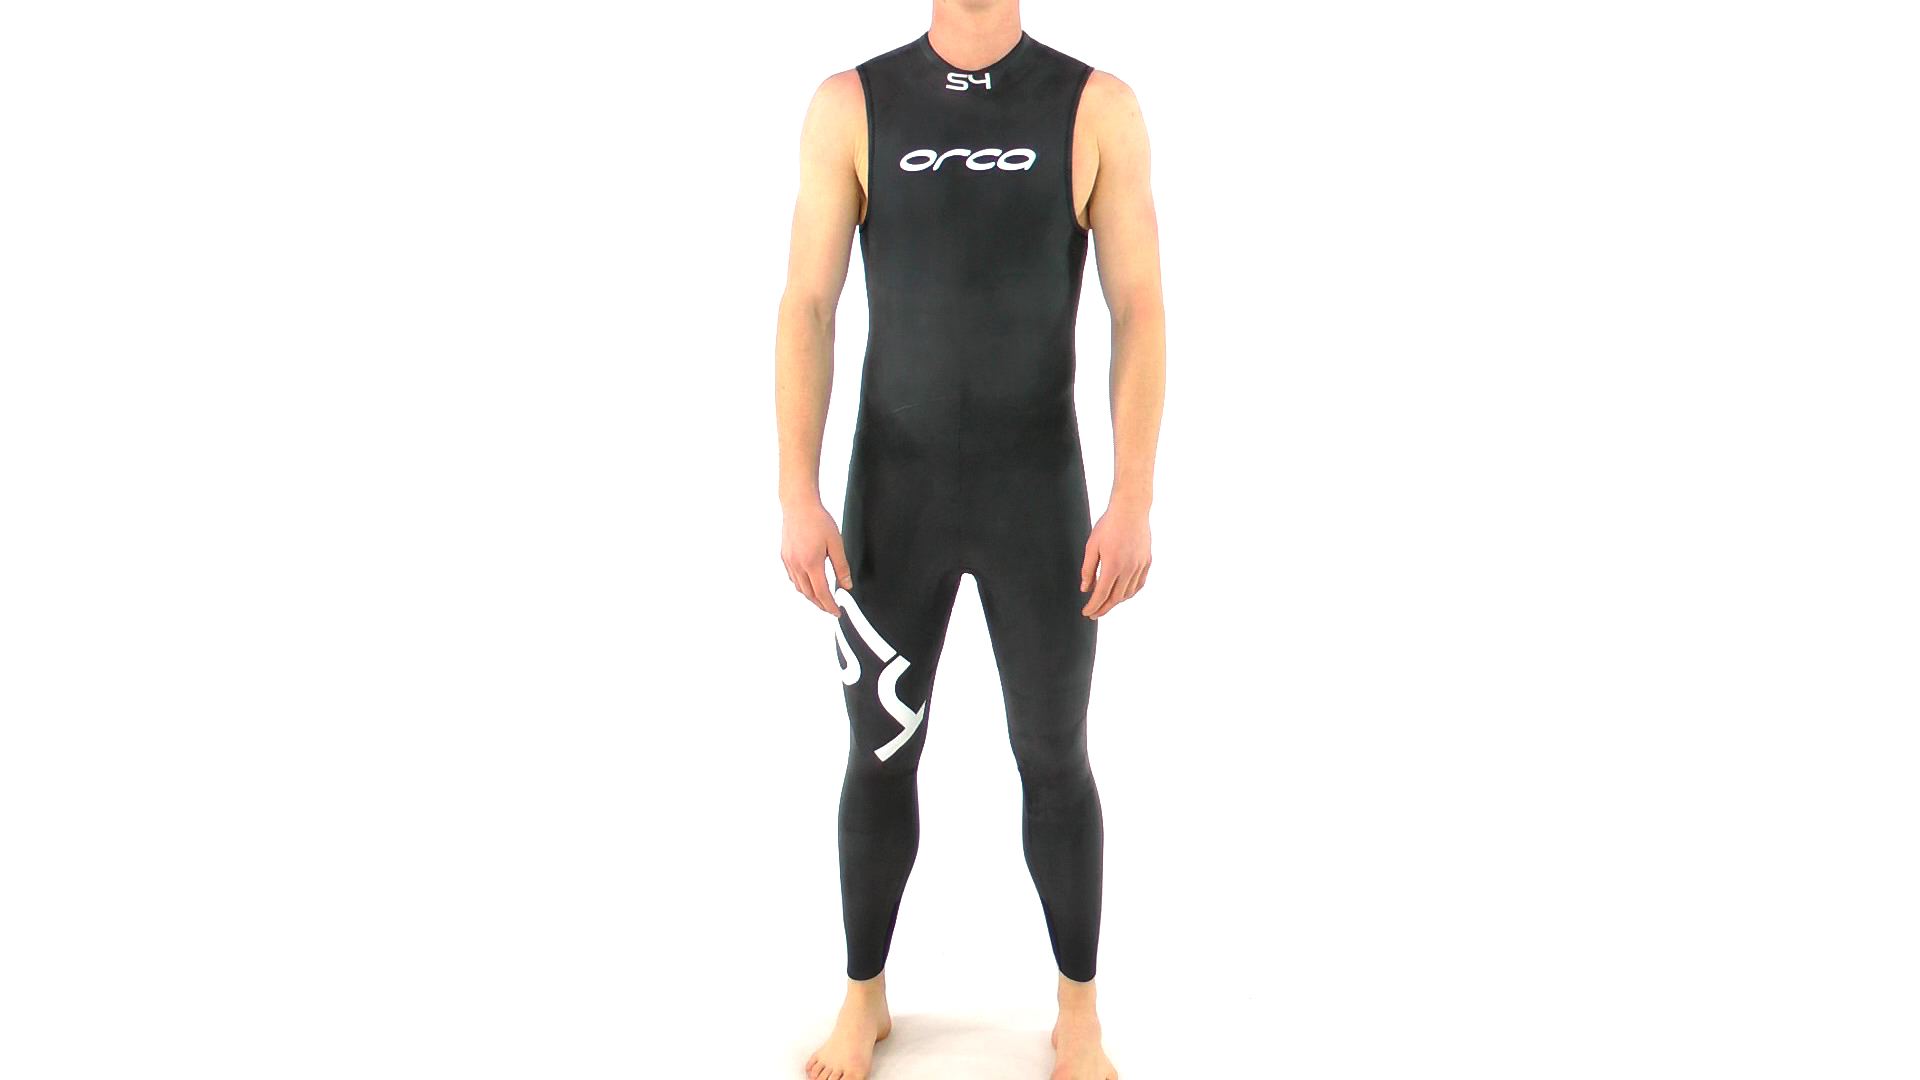 Orca Men's S4 Sleeveless Triathlon Wetsuit at SwimOutlet.com - Free ...